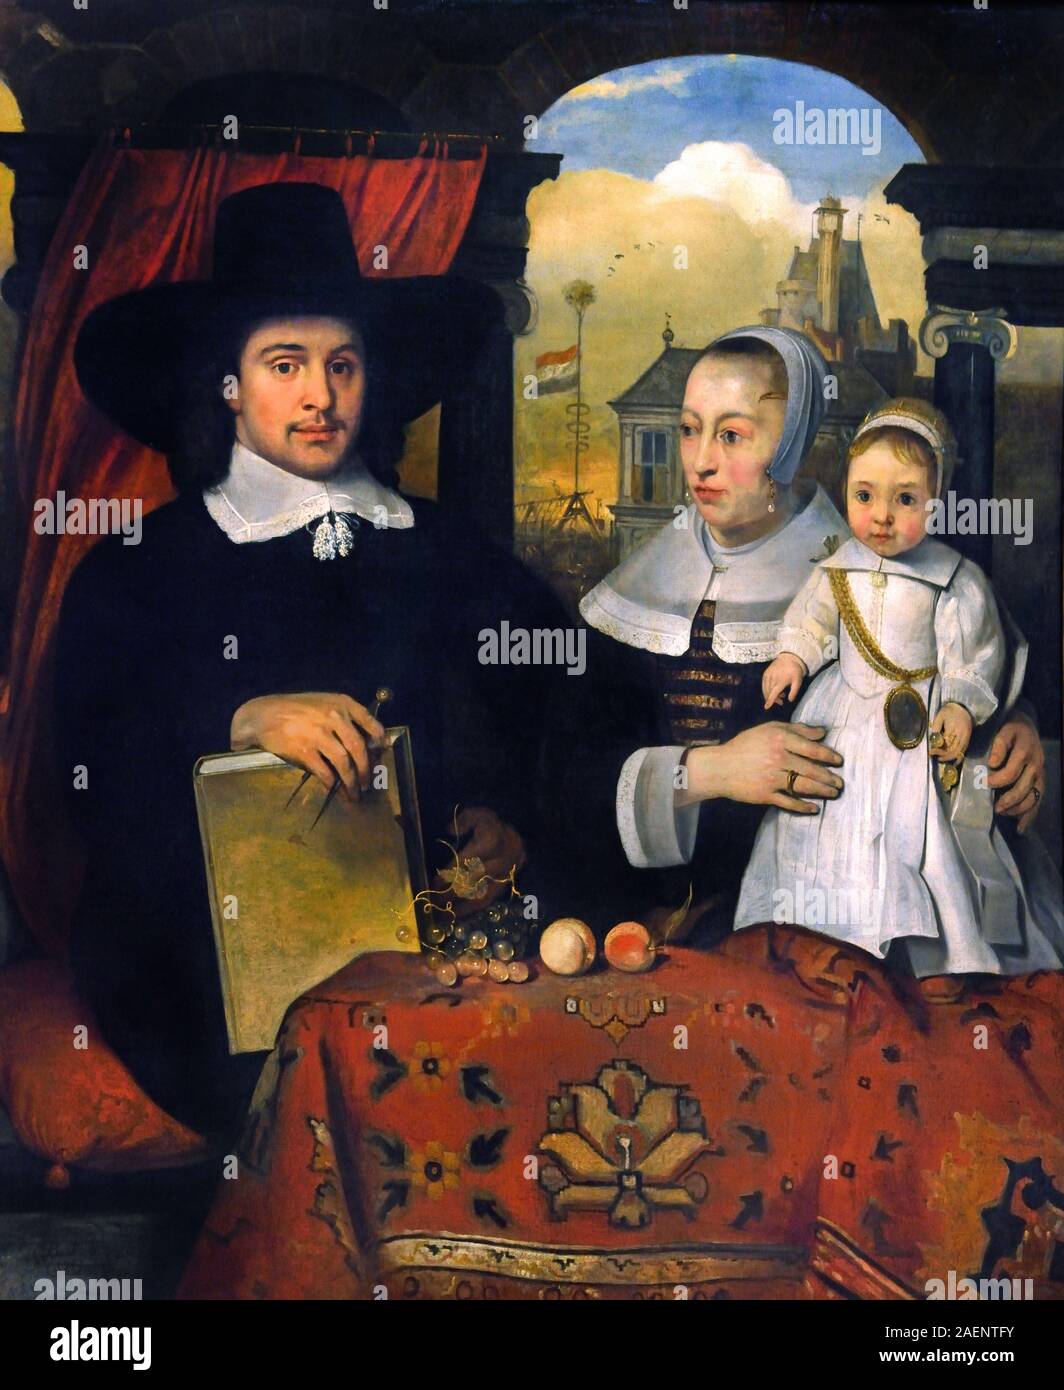 Willem van der Helm and his Wife, Barent, Bernard Pietersz Fabritius, Fabricius, 1624 - 1673, Dutch, The Netherlands. Stock Photo